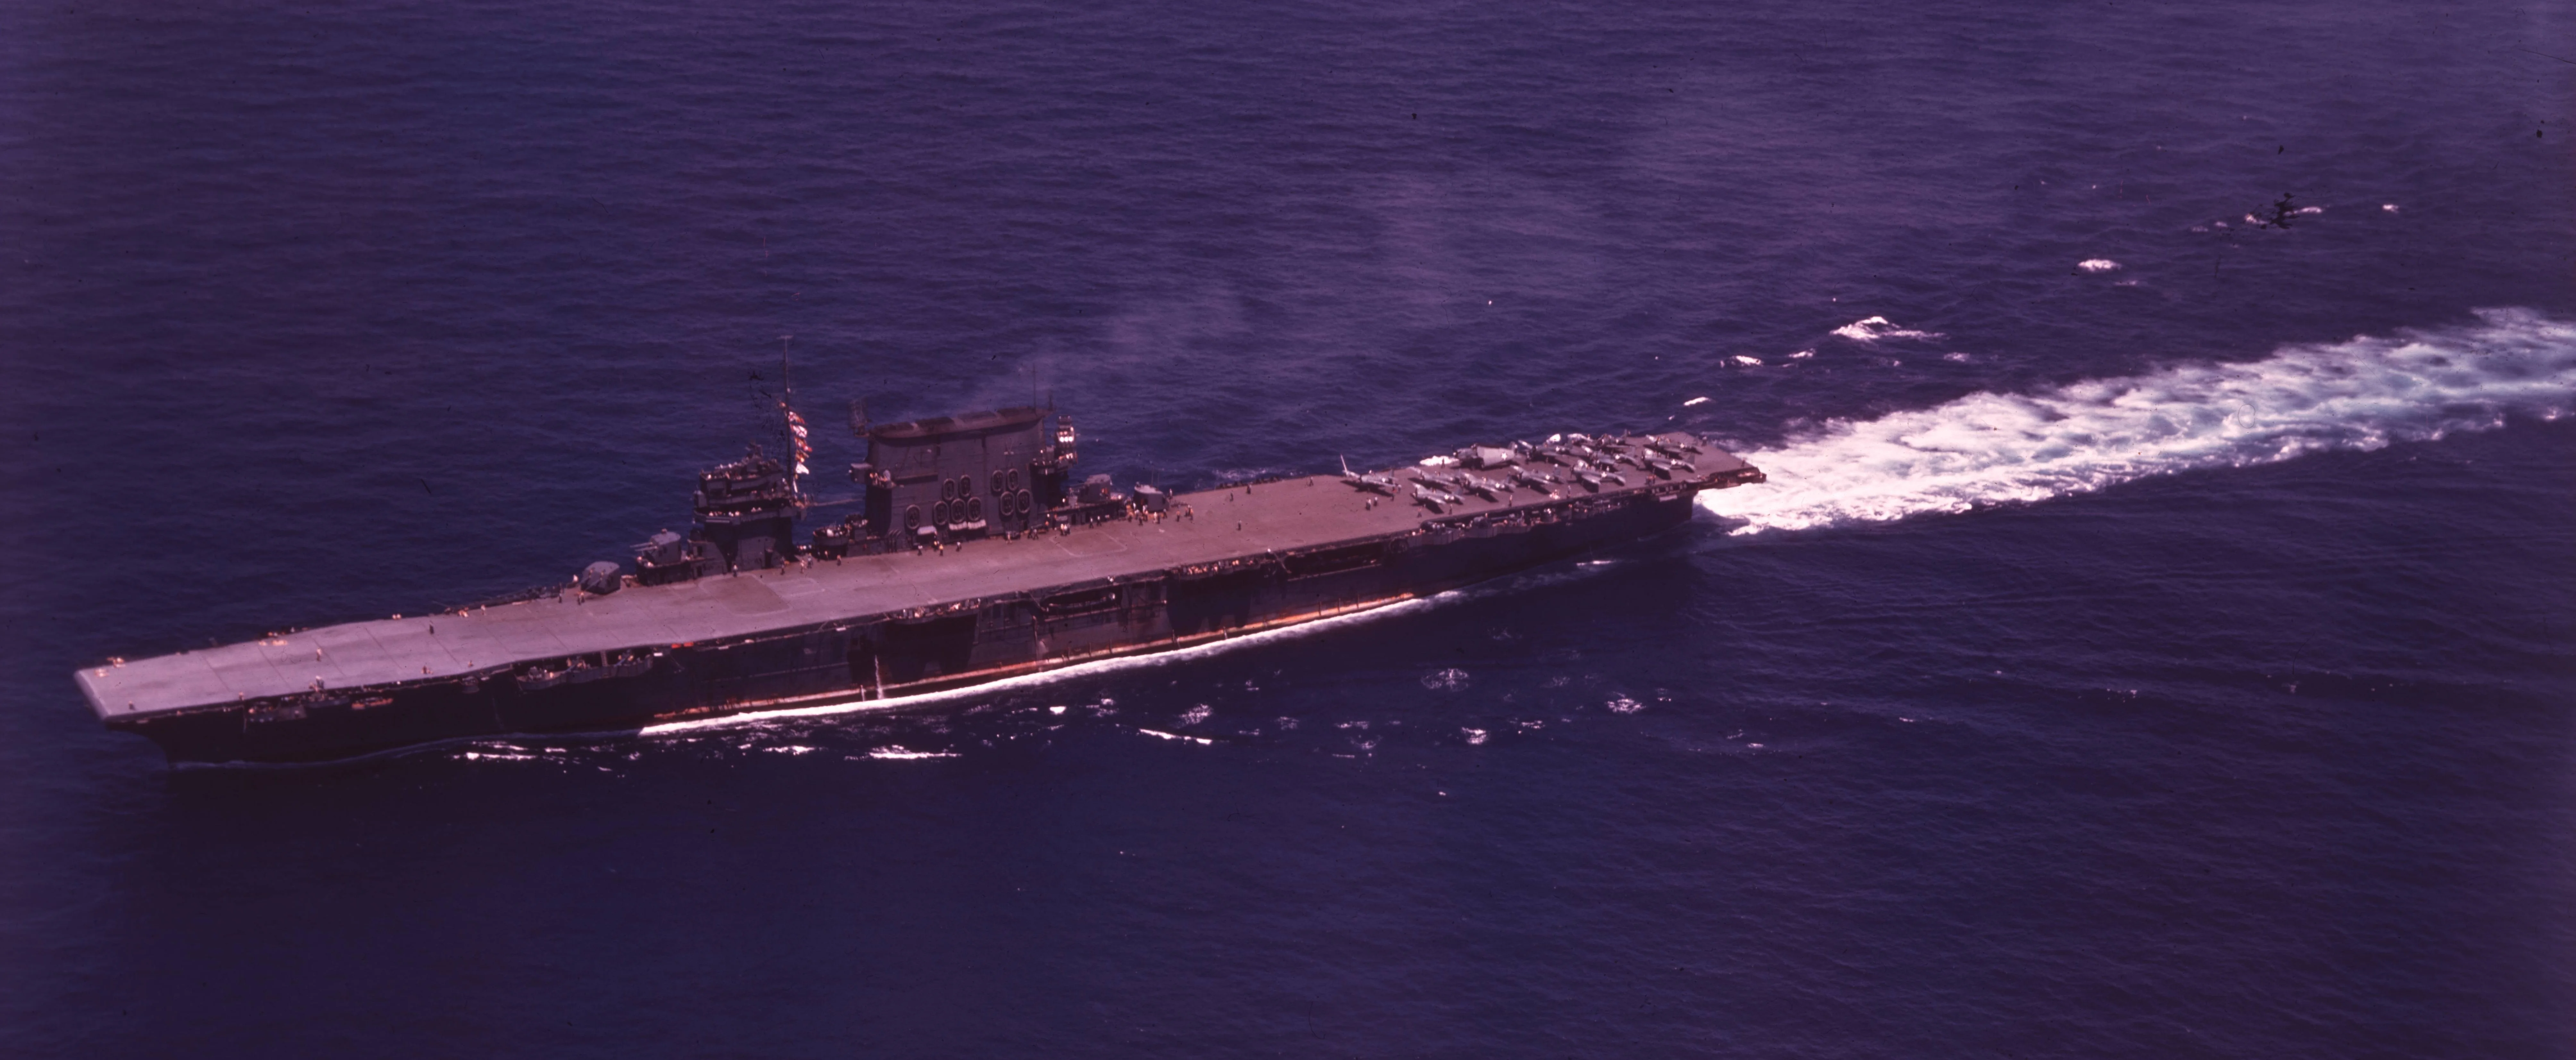 126440 - USS Saratoga (CV-3), 1942 г.